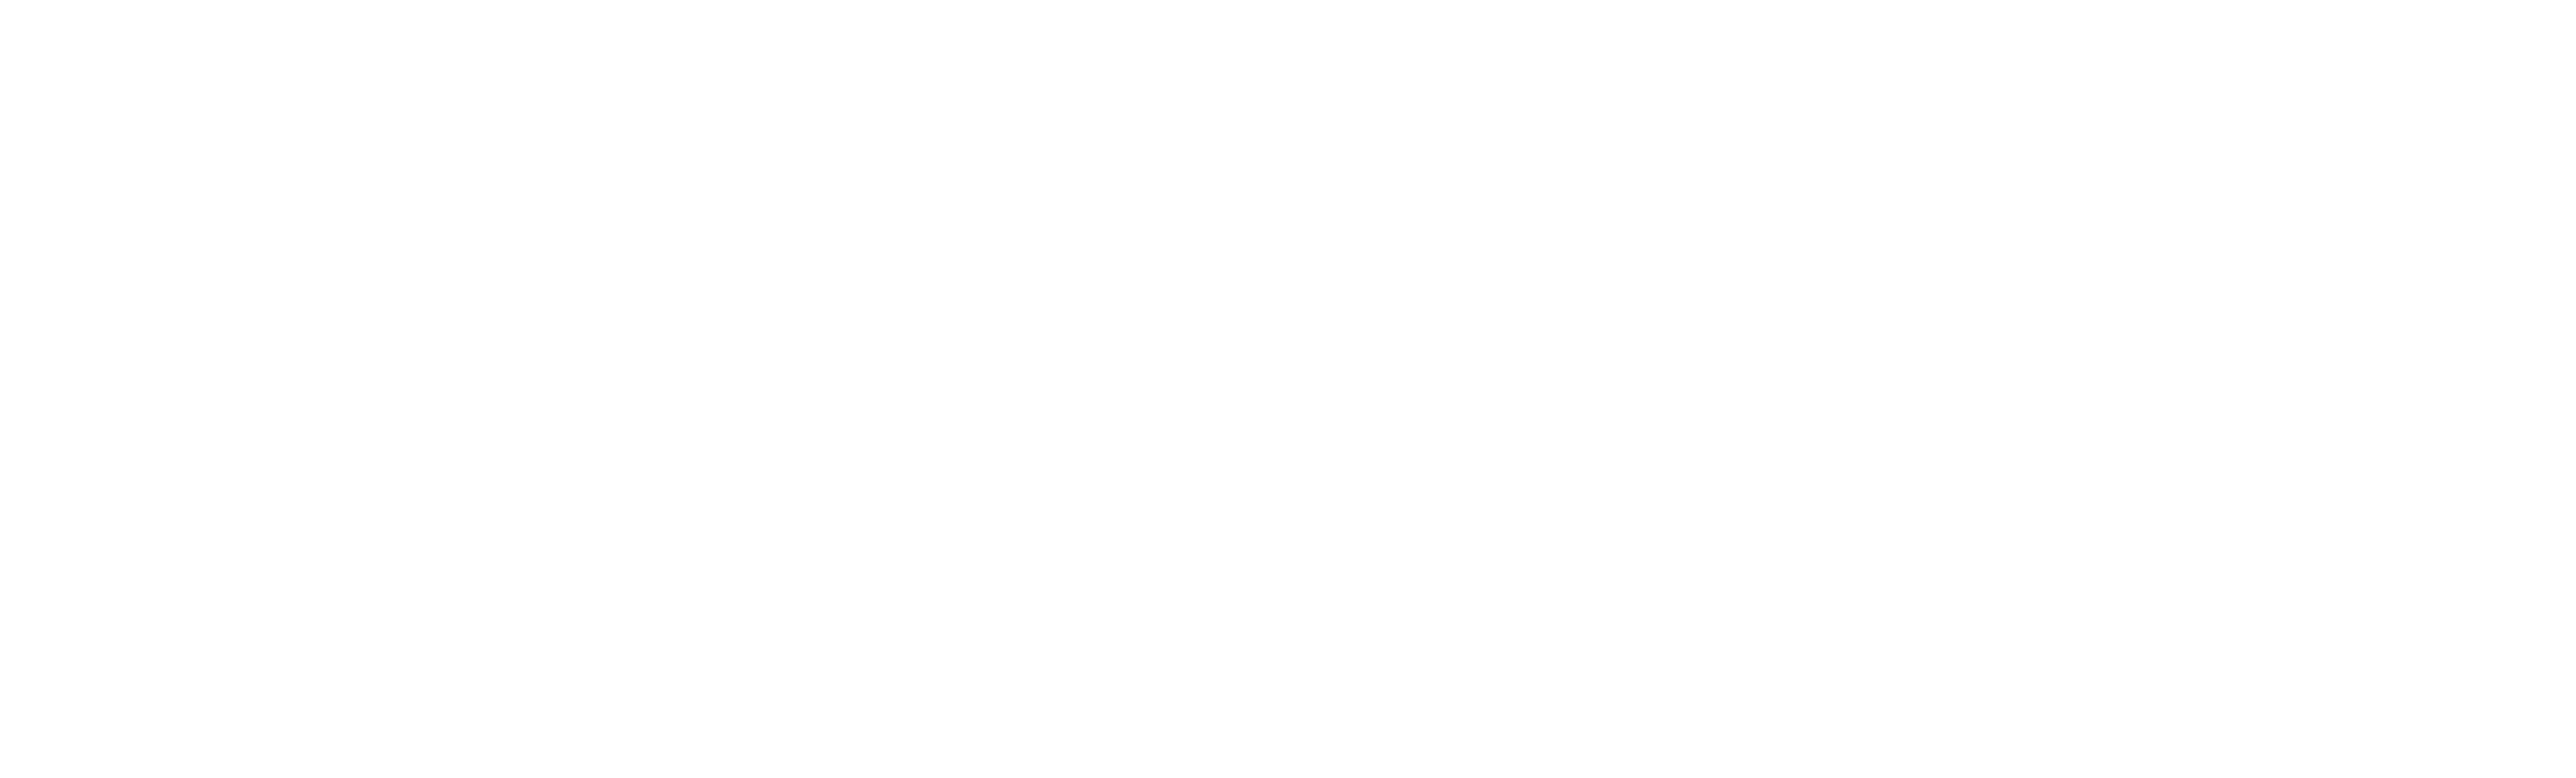 Spotify Logo png download - 1920*1080 - Free Transparent Logo png